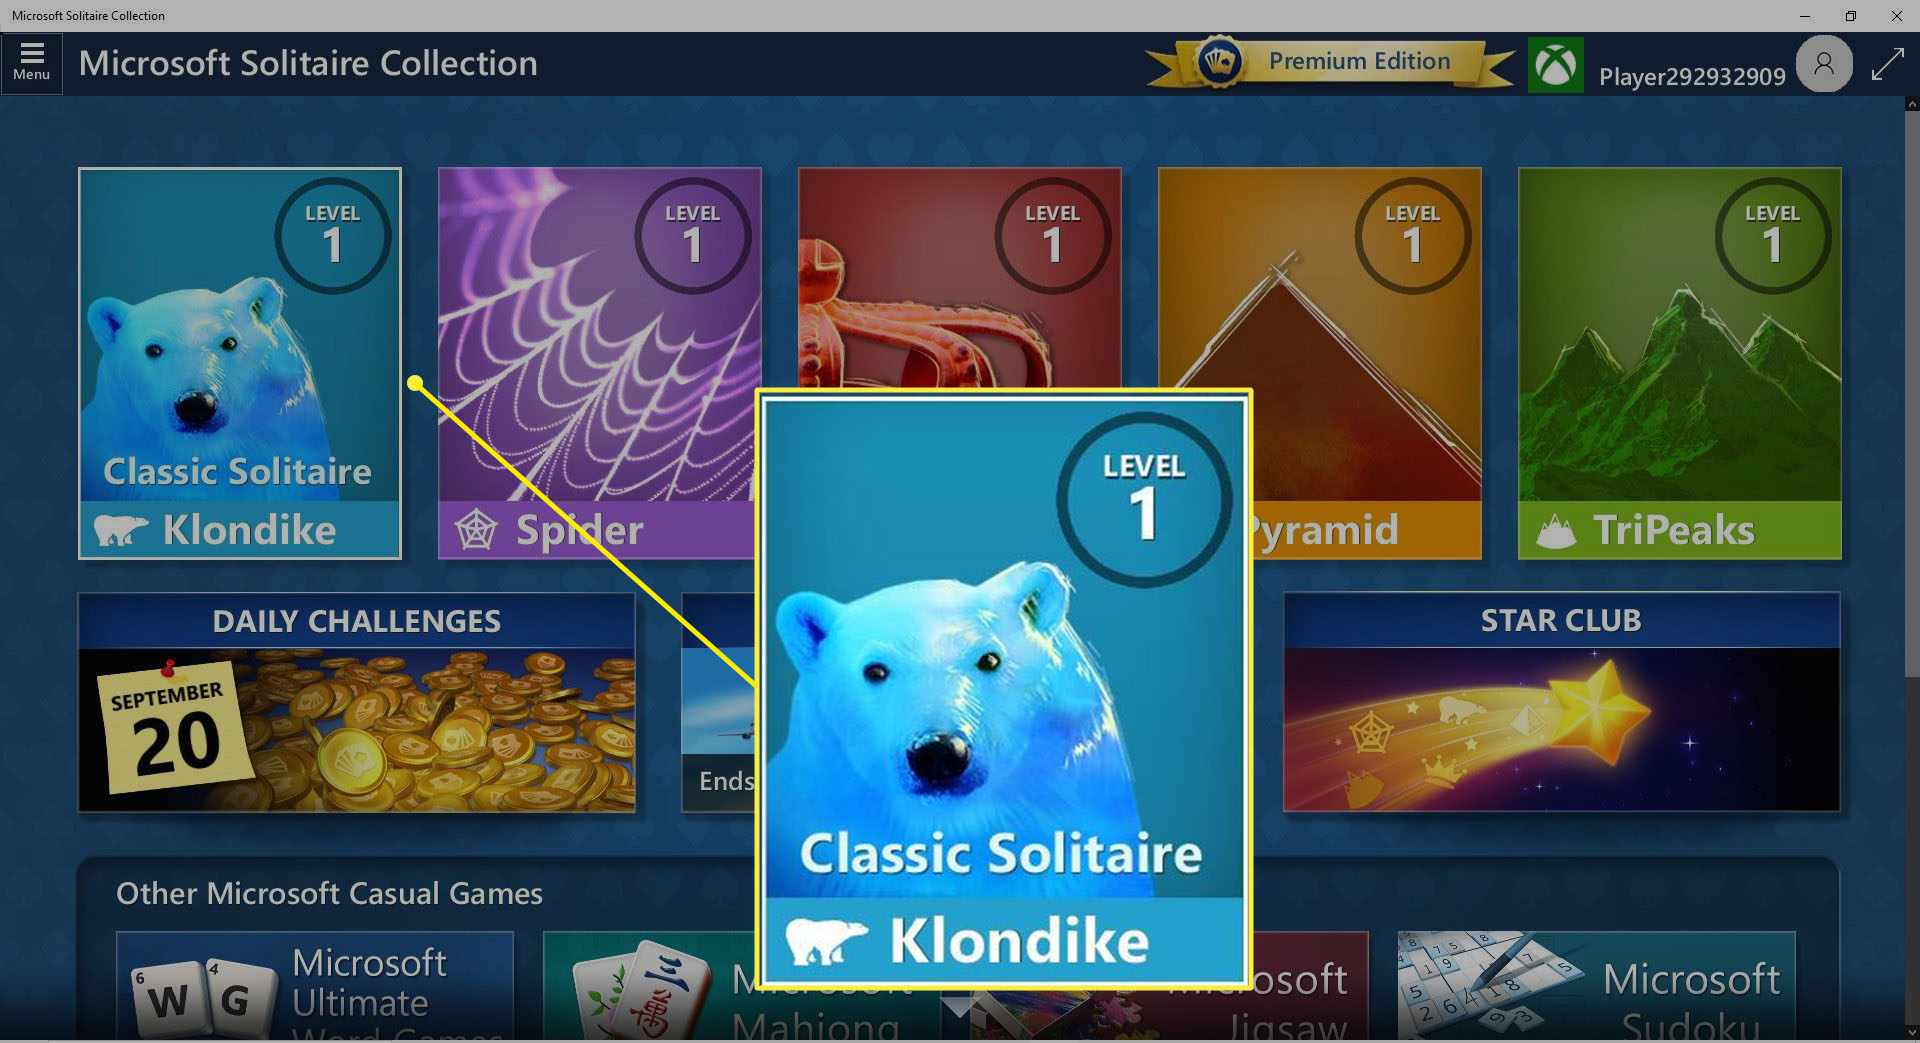 Screenshot Classic Solitaire (Klondike) v kolekci MS Solitaire